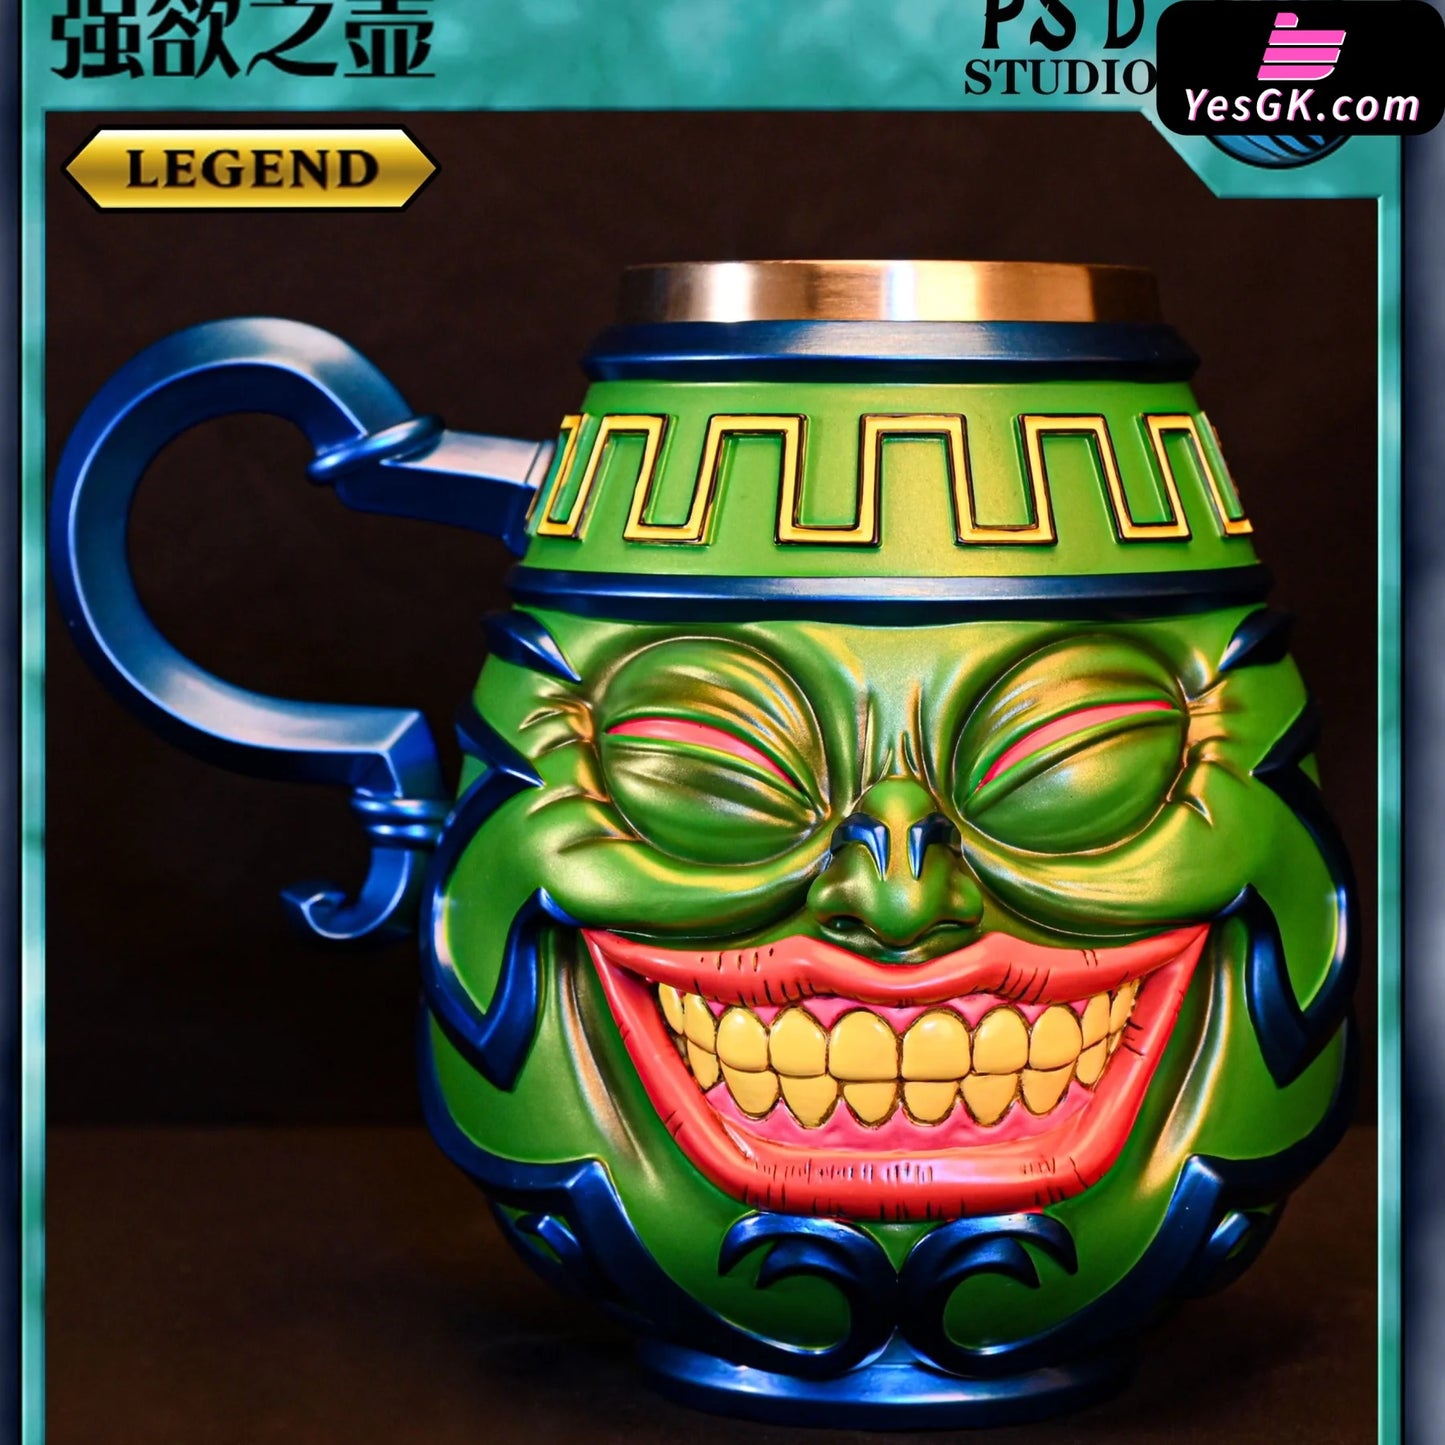 Yu-Gi-Oh Pot Of Greed Cup Resin Statue - Psd Studio [Pre-Order] Yu-Gi-Oh!